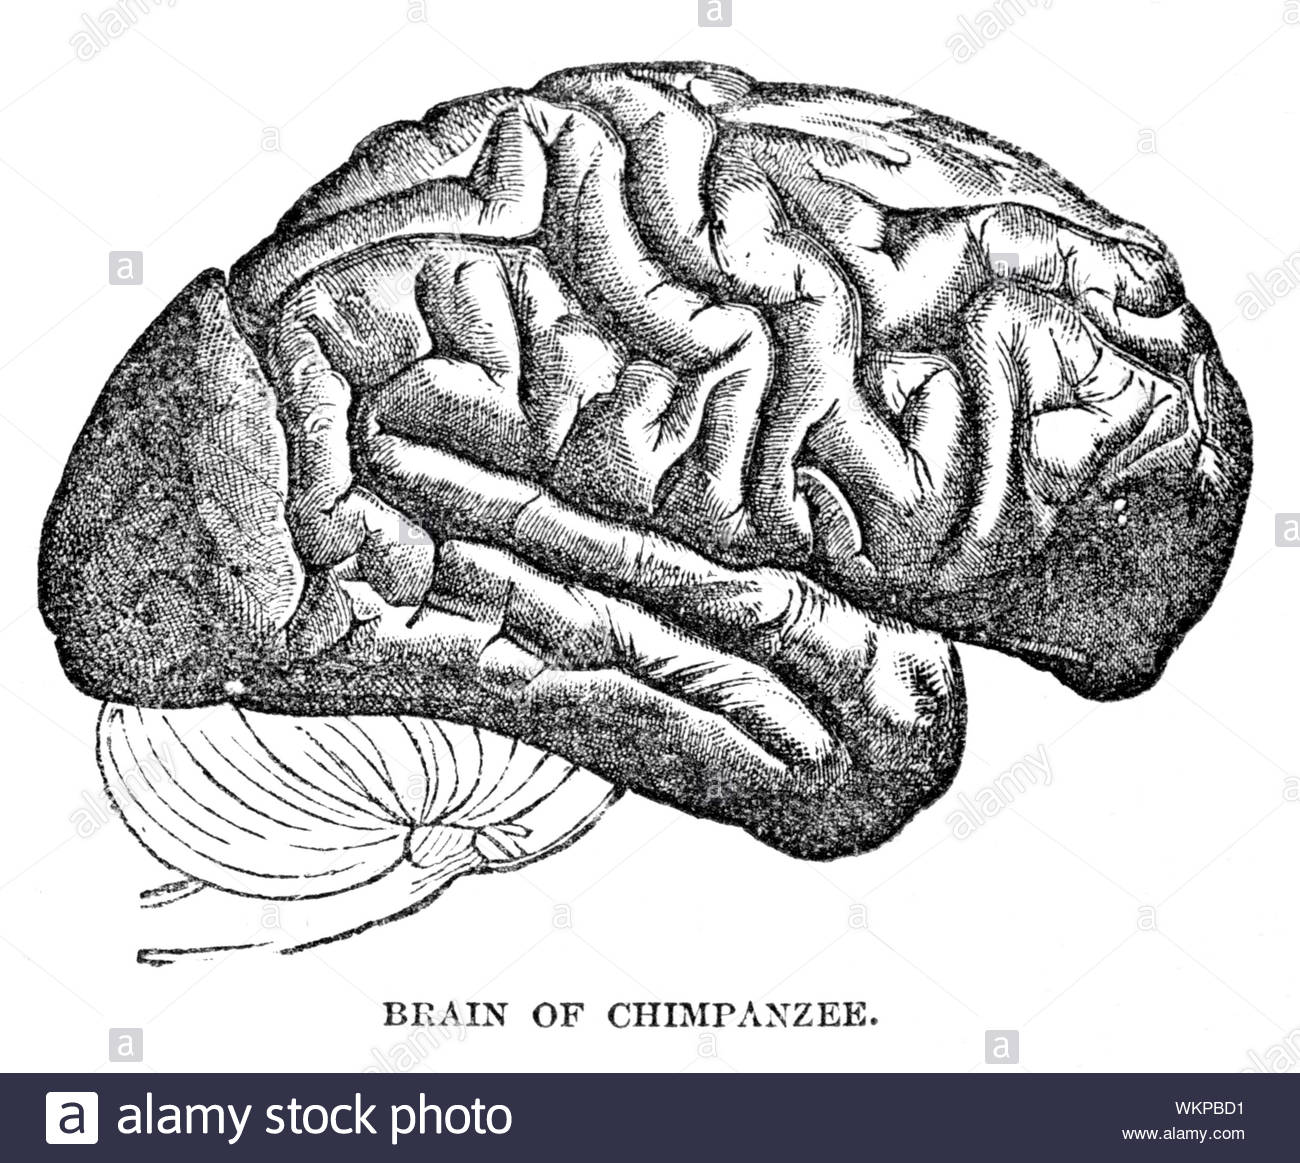 Brain of Chimpanzee, vintage illustration from 1884 Stock Photo